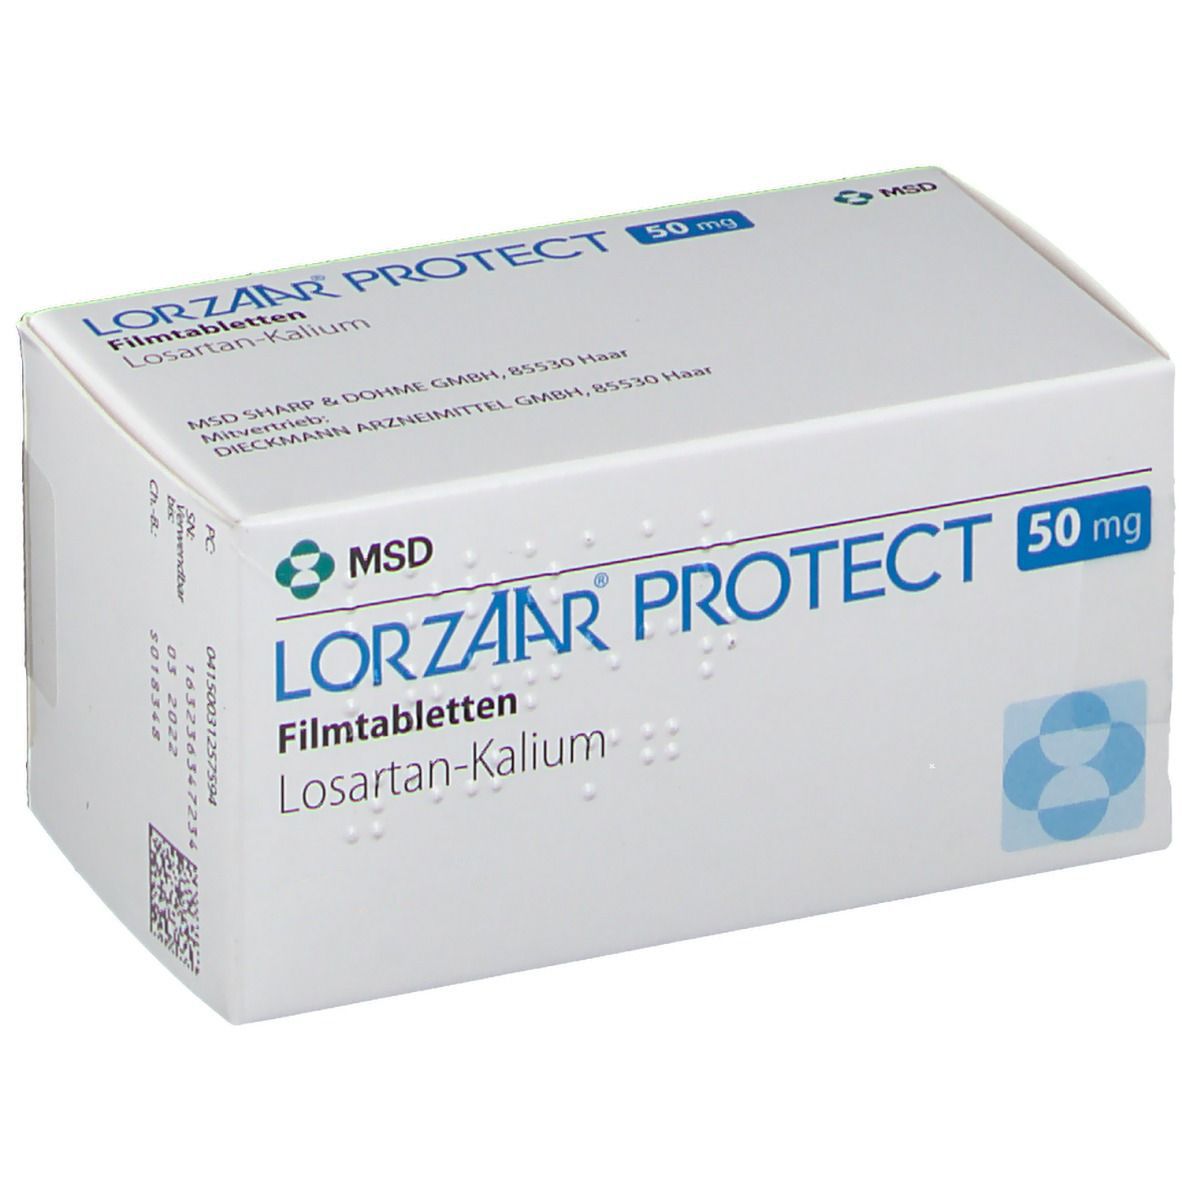 LORZAAR® PROTECT 50 mg